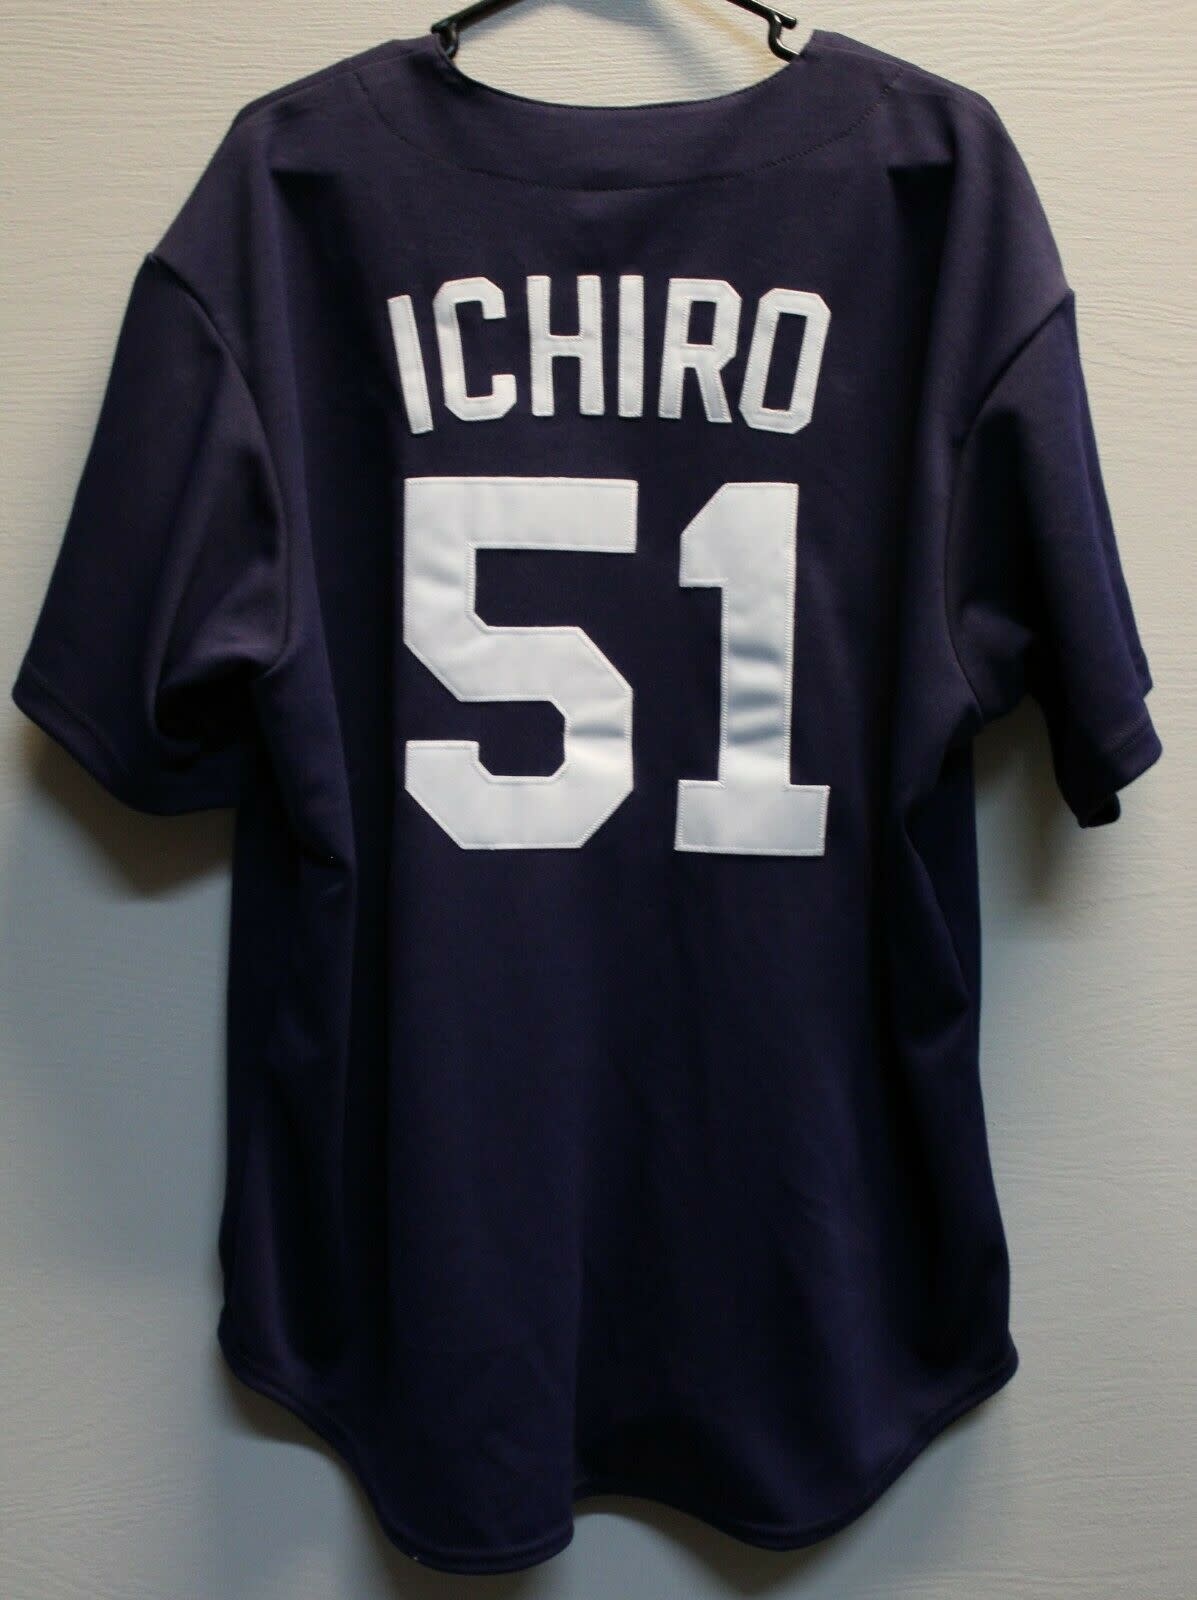 Ichiro Suzuki #51 Seattle Mariners Jersey Size XL MLB